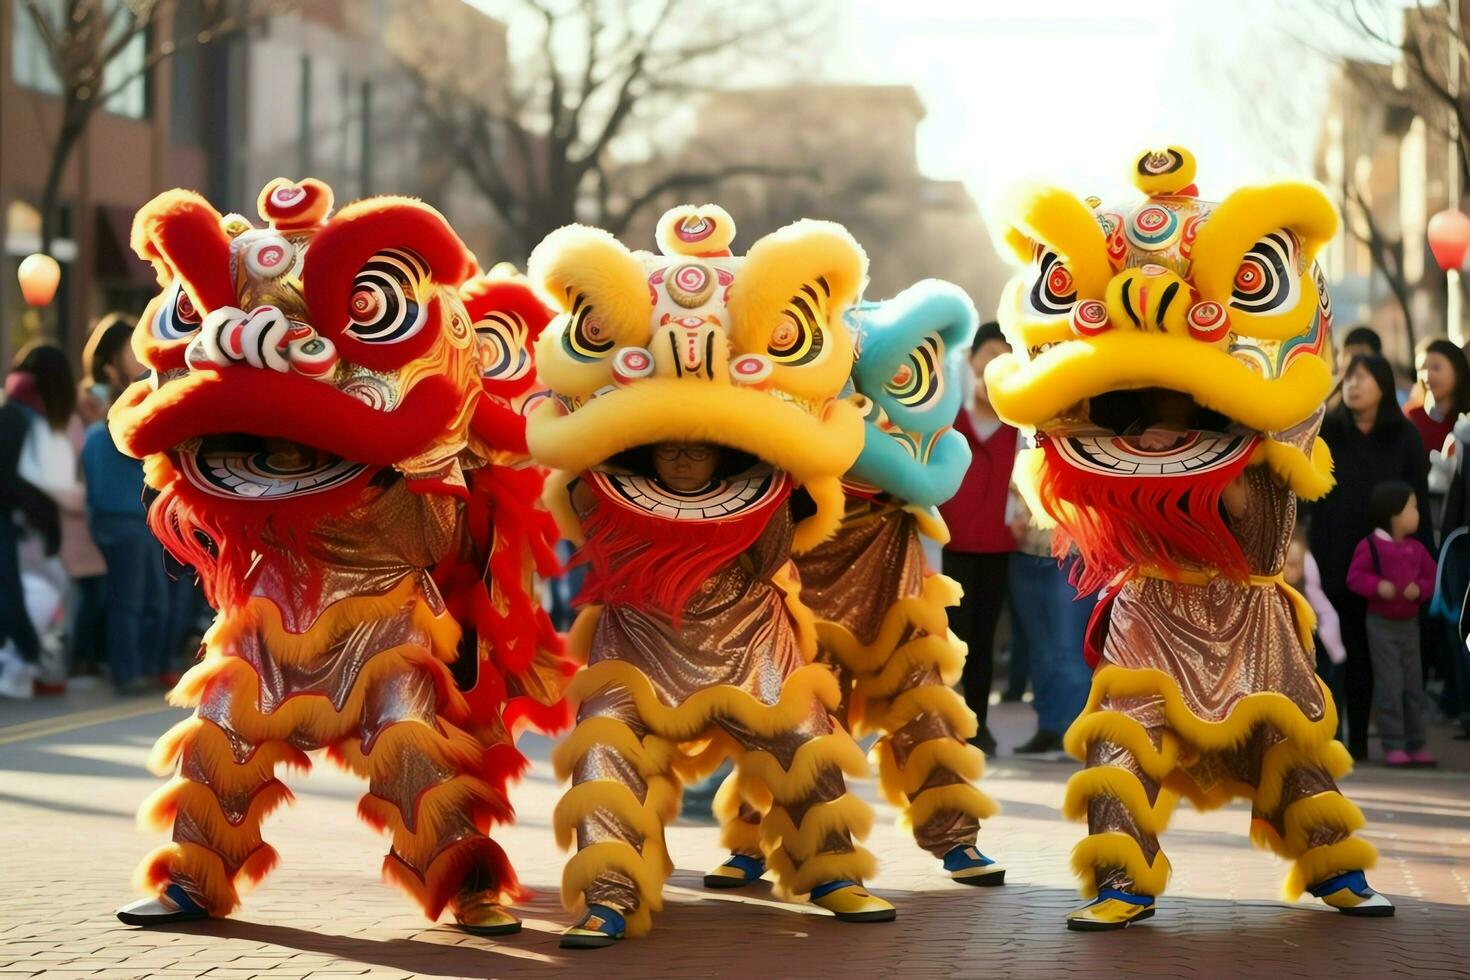 continuar o león danza espectáculo barongsai en celebracion chino lunar nuevo año festival. asiático tradicional concepto por ai generado foto